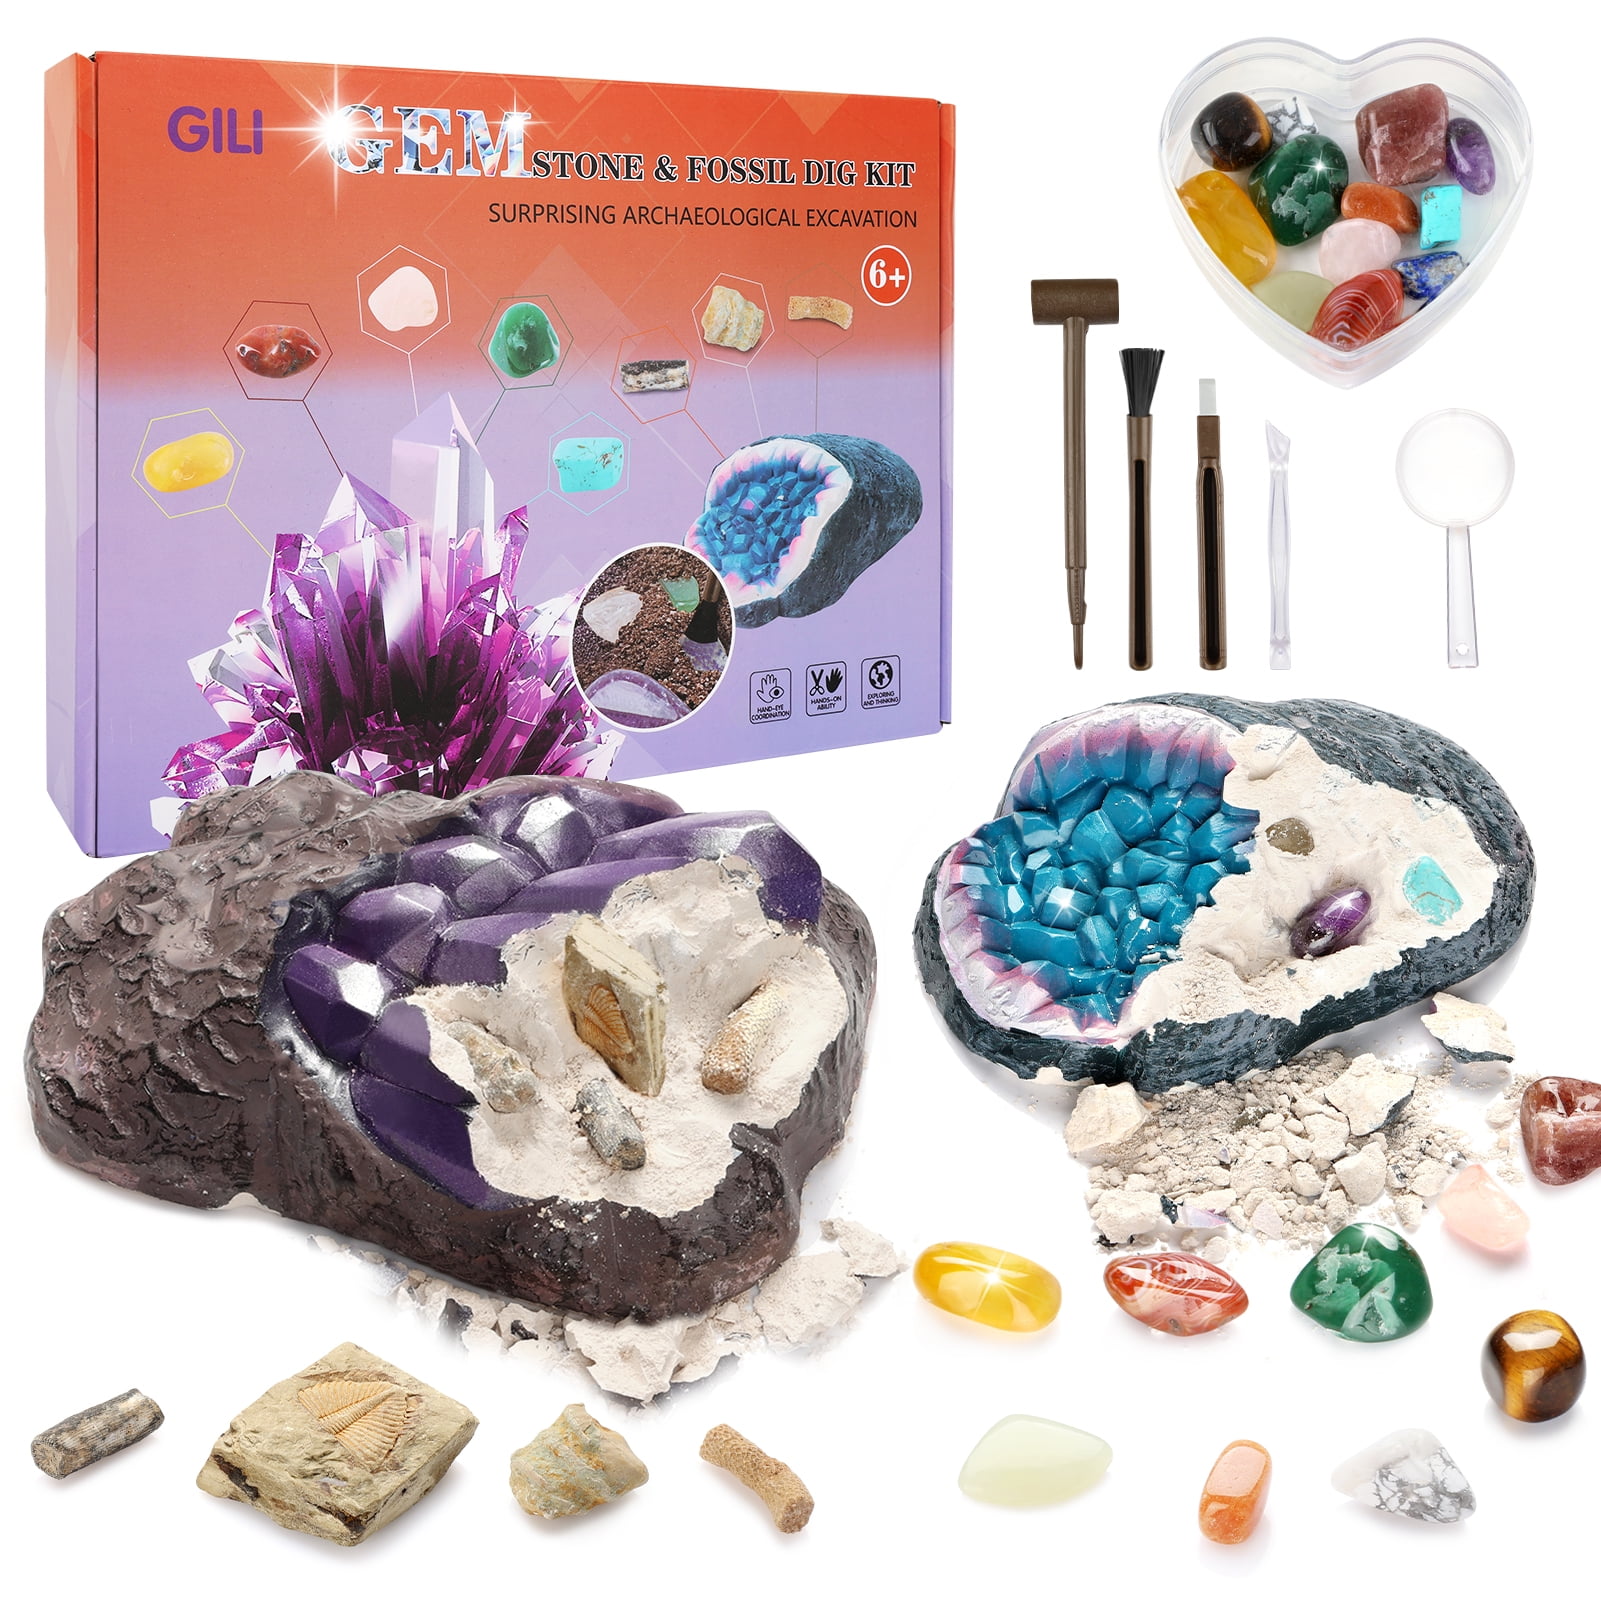 Dan & Darci Mega Gem Dig Kit - Dig up 15 Real Gemstones - Walmart.com